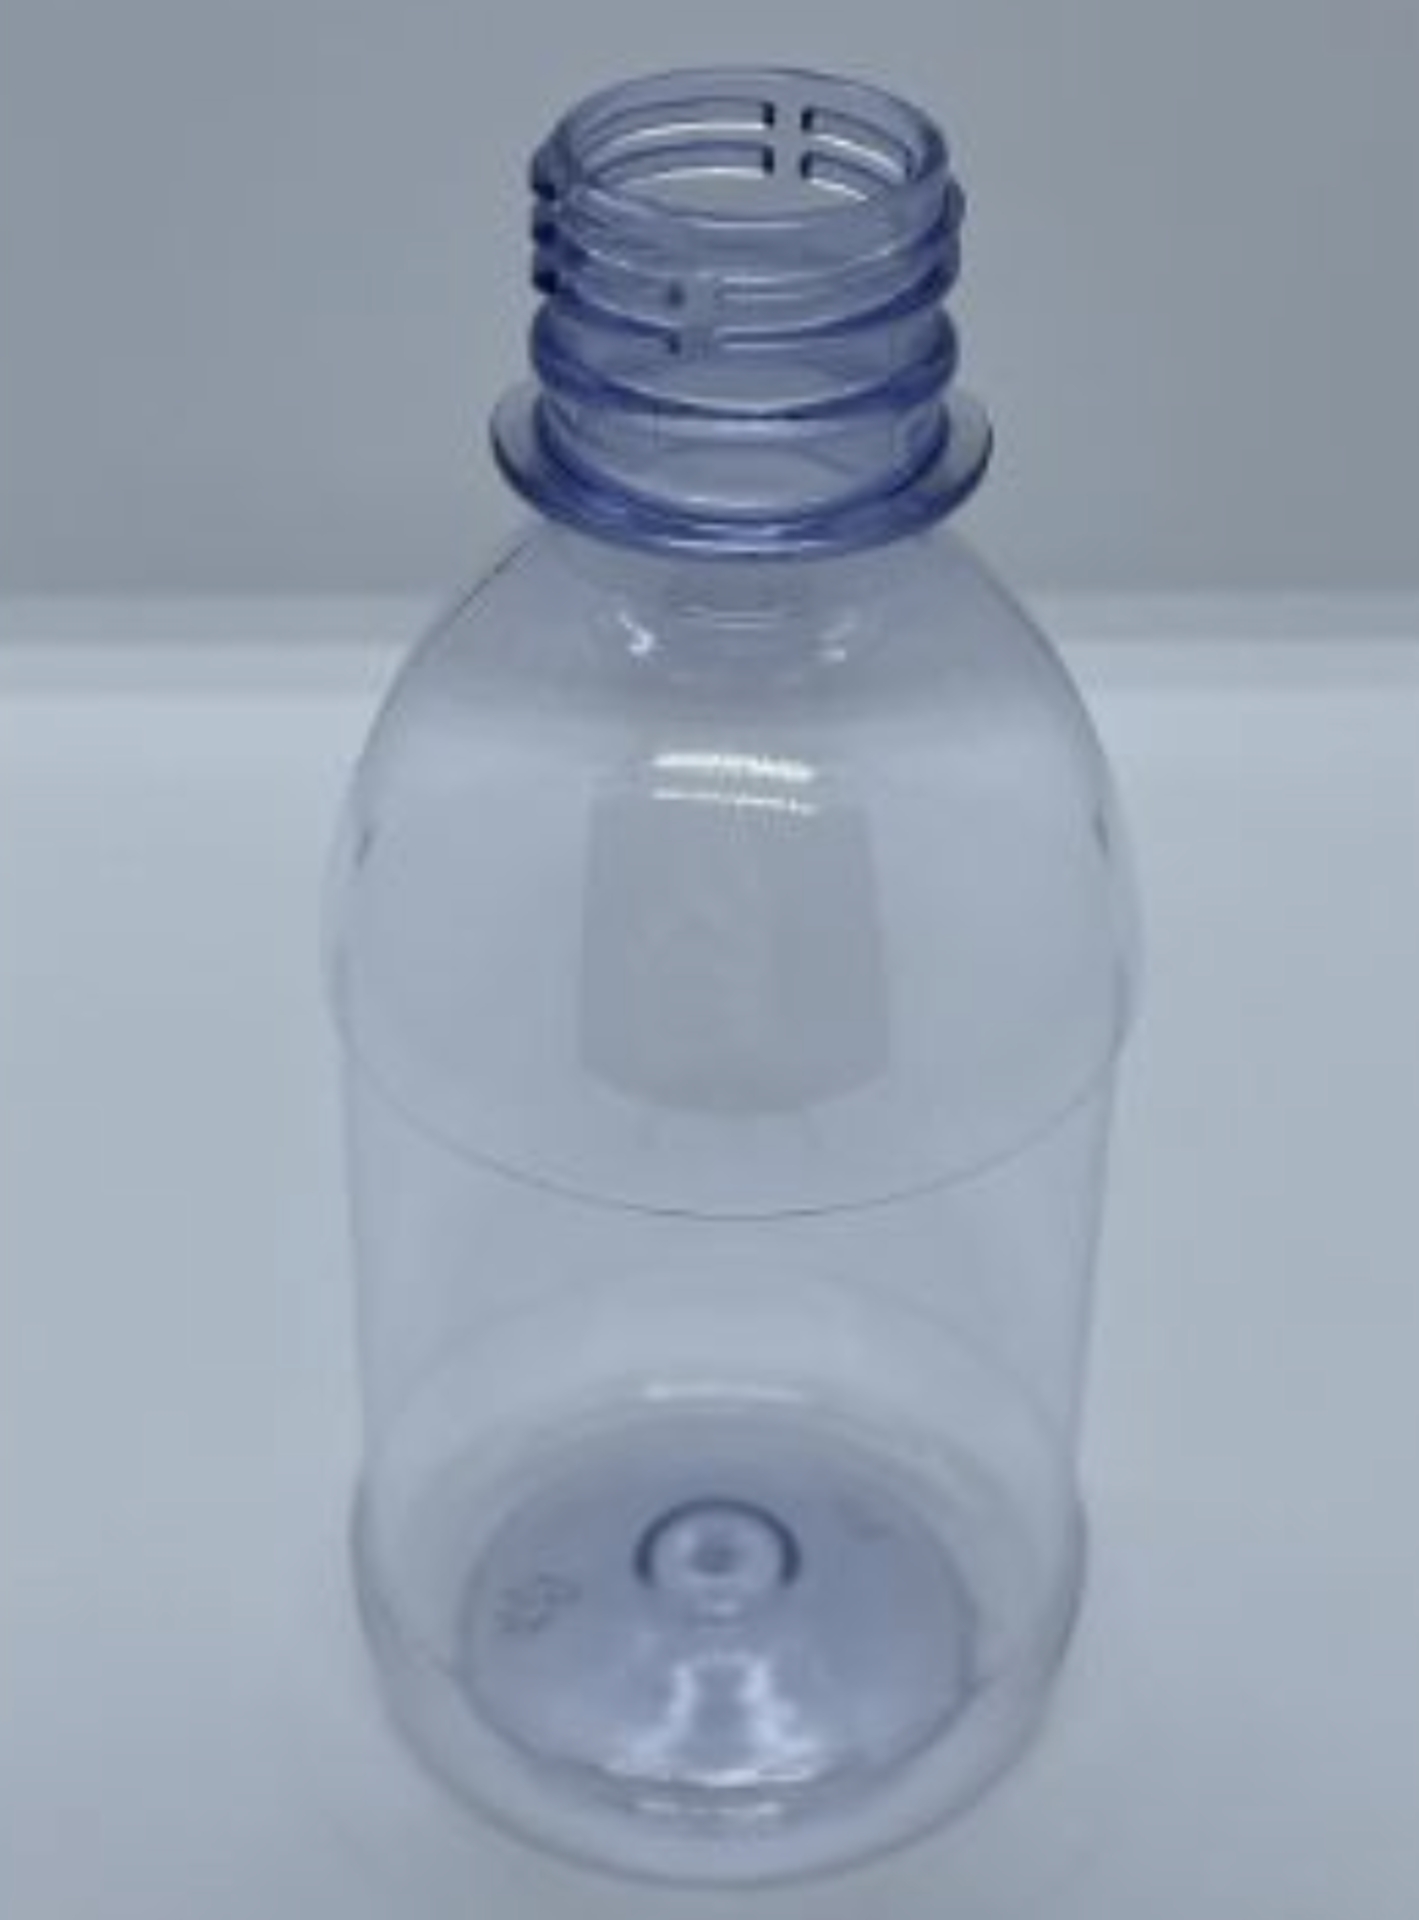 79,000 - 8 oz Empty Plastic Water Bottles, Neck Threading 28-410, 5.25" Tall x 2.25" Diameter - Image 2 of 5